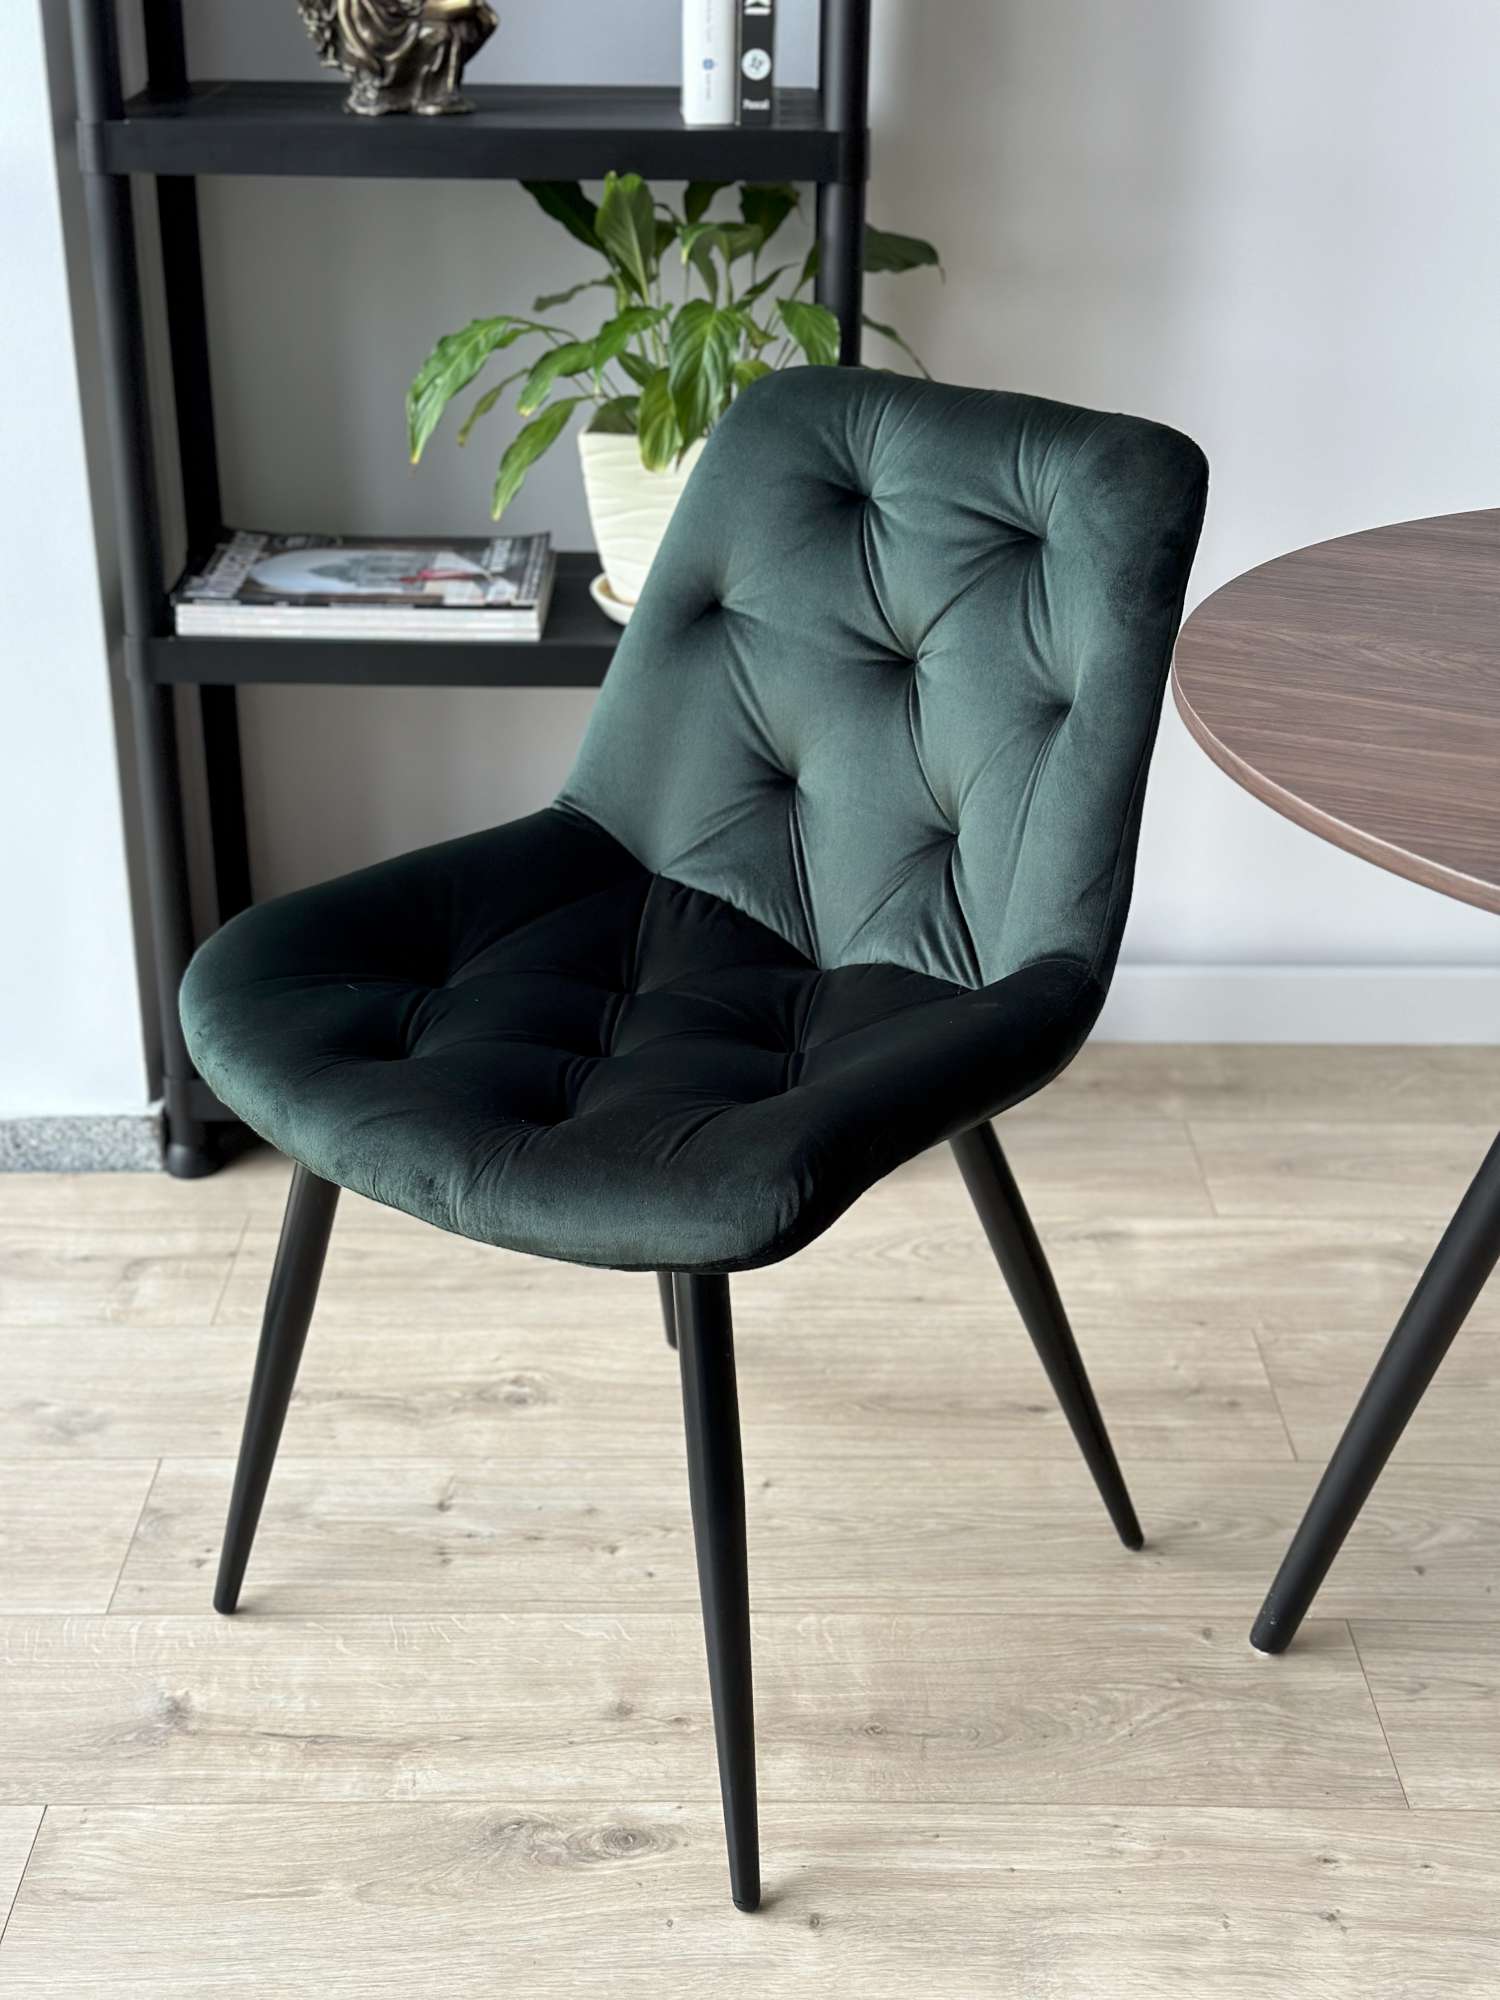 Krzesło aksamitne ELIOT beżowe velvet